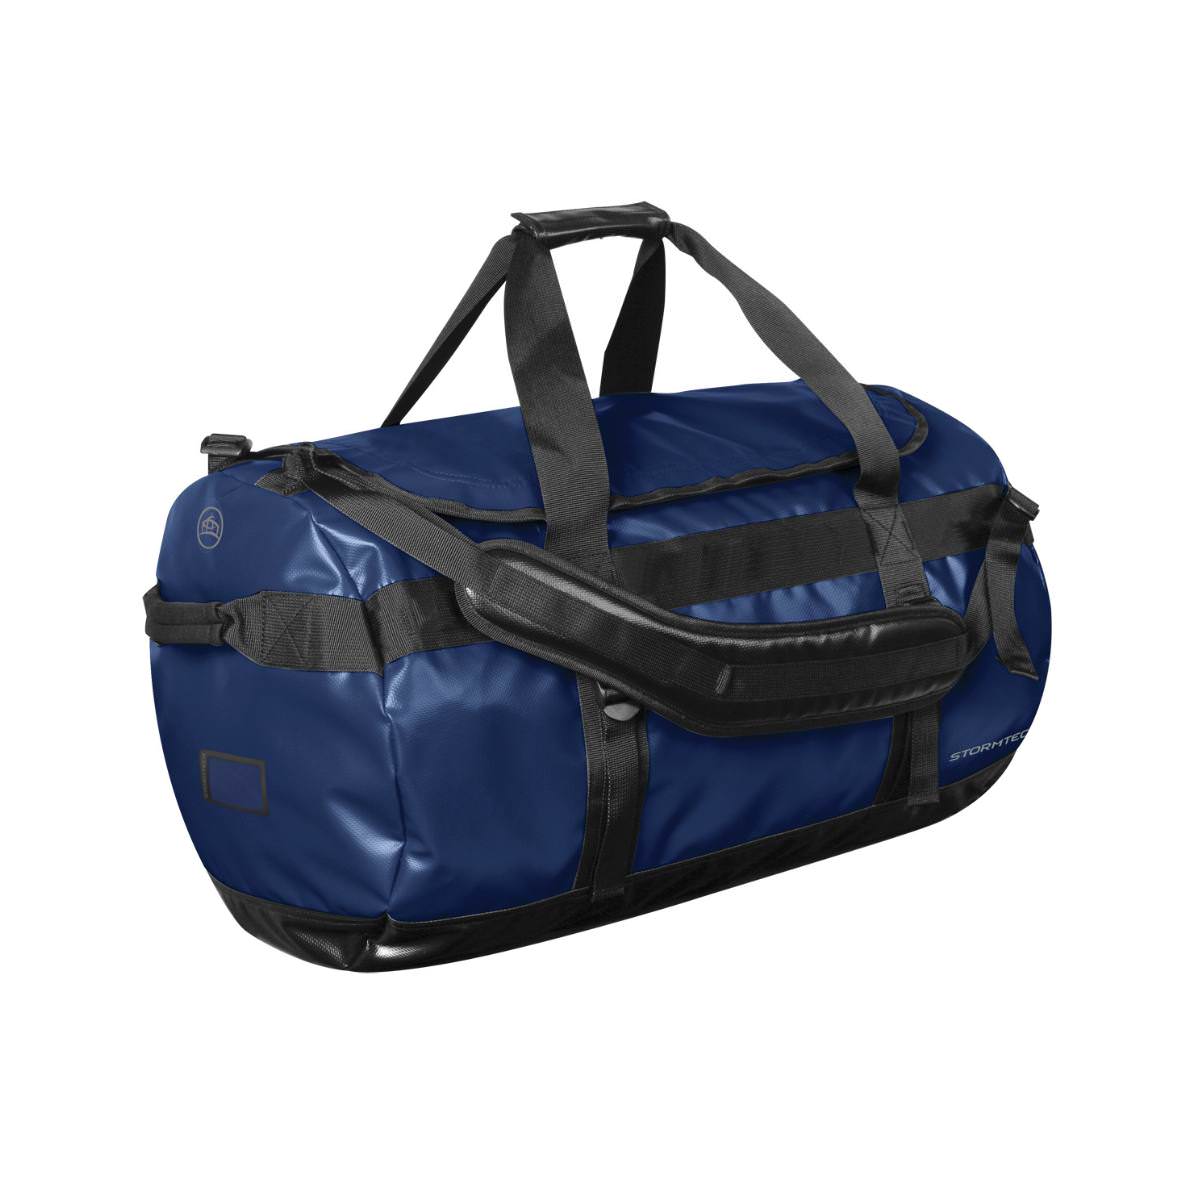 Stormtech Gear Bag Large GBW-1L